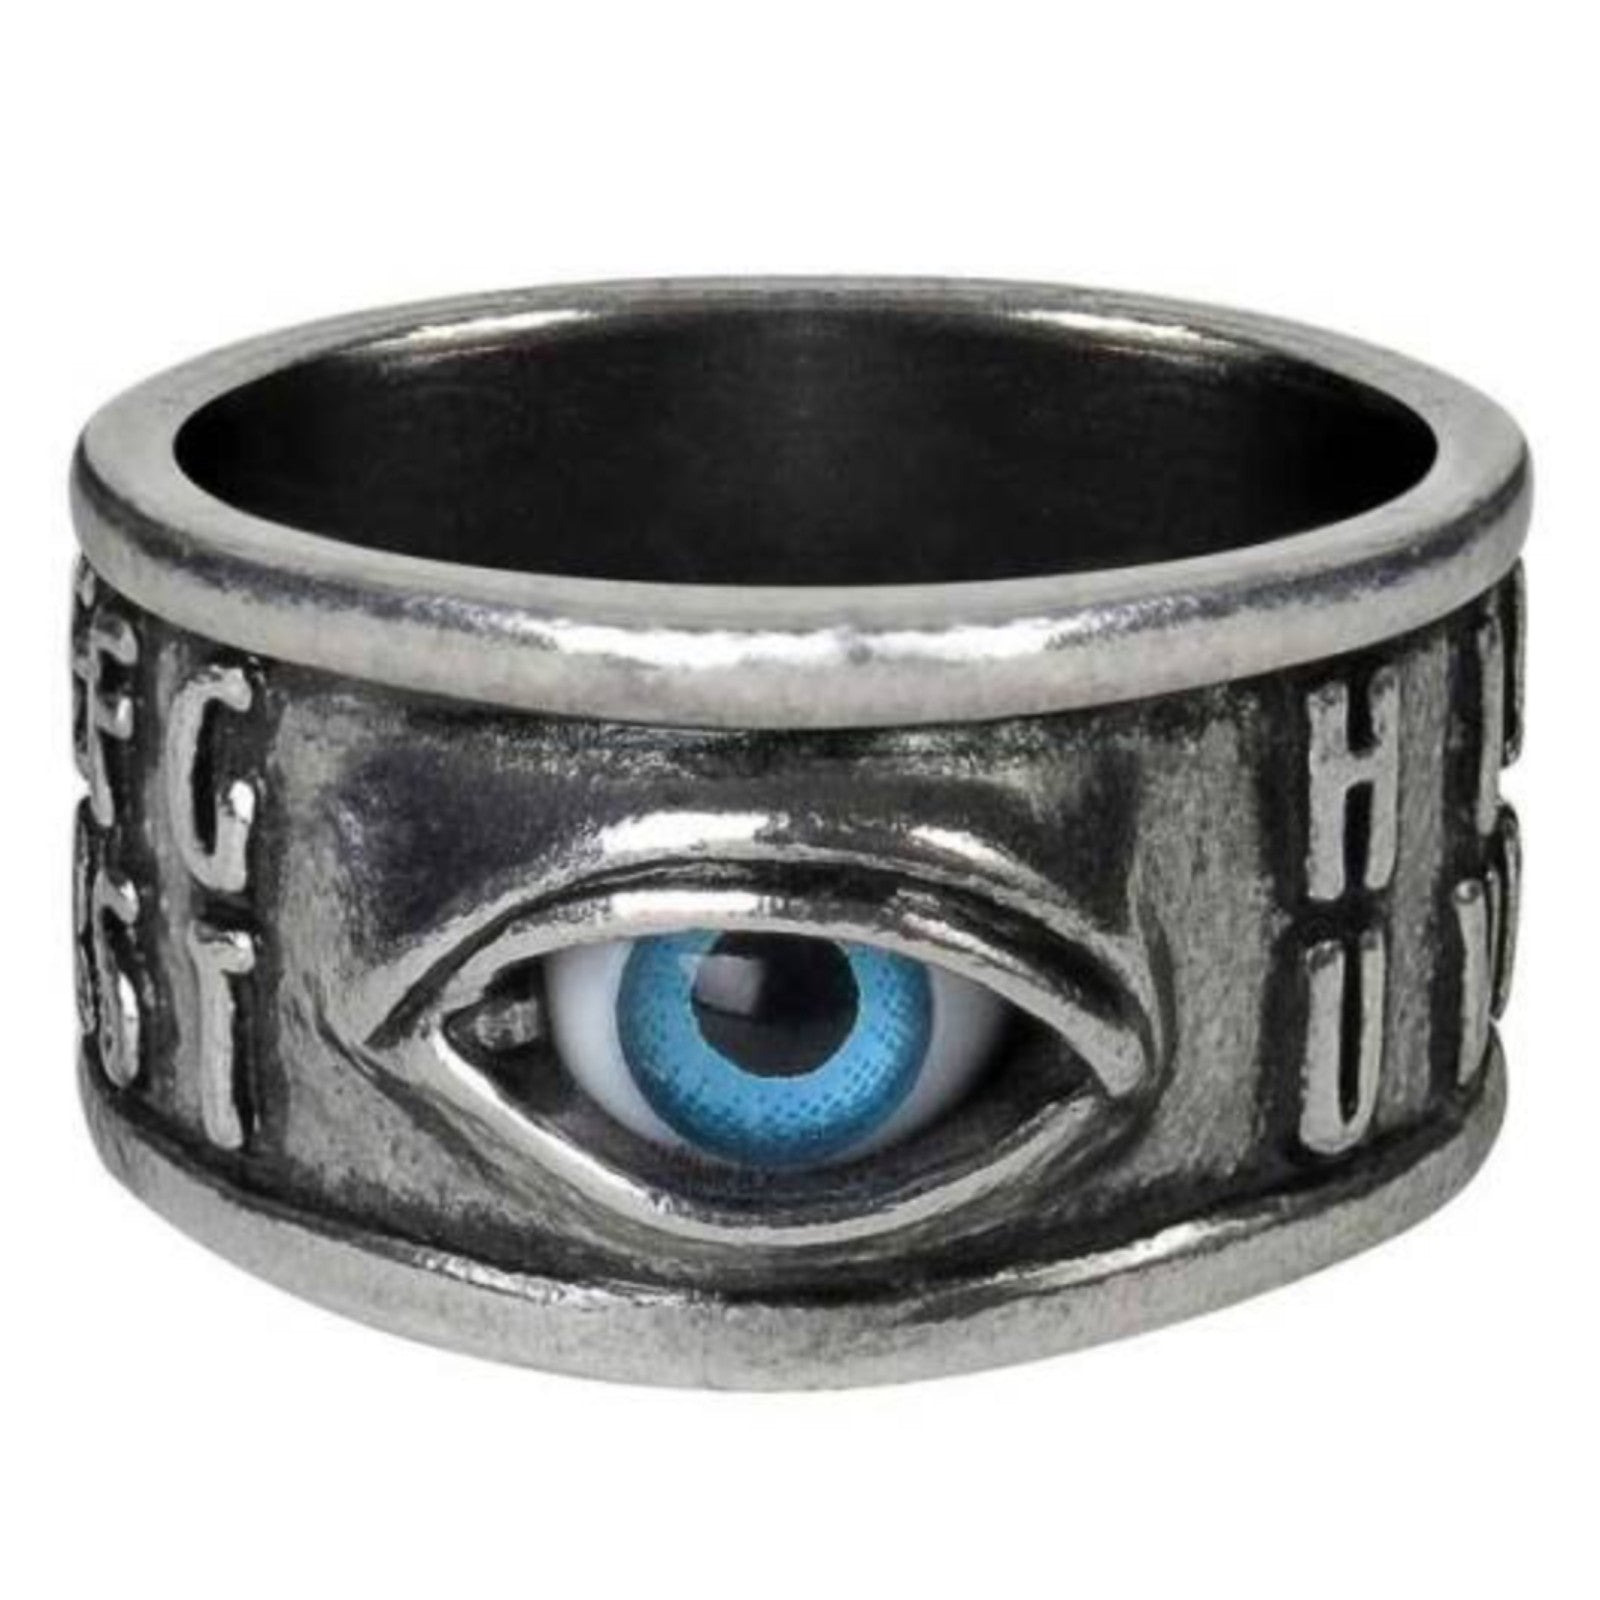 Alchemy England Ouija Eye Ring